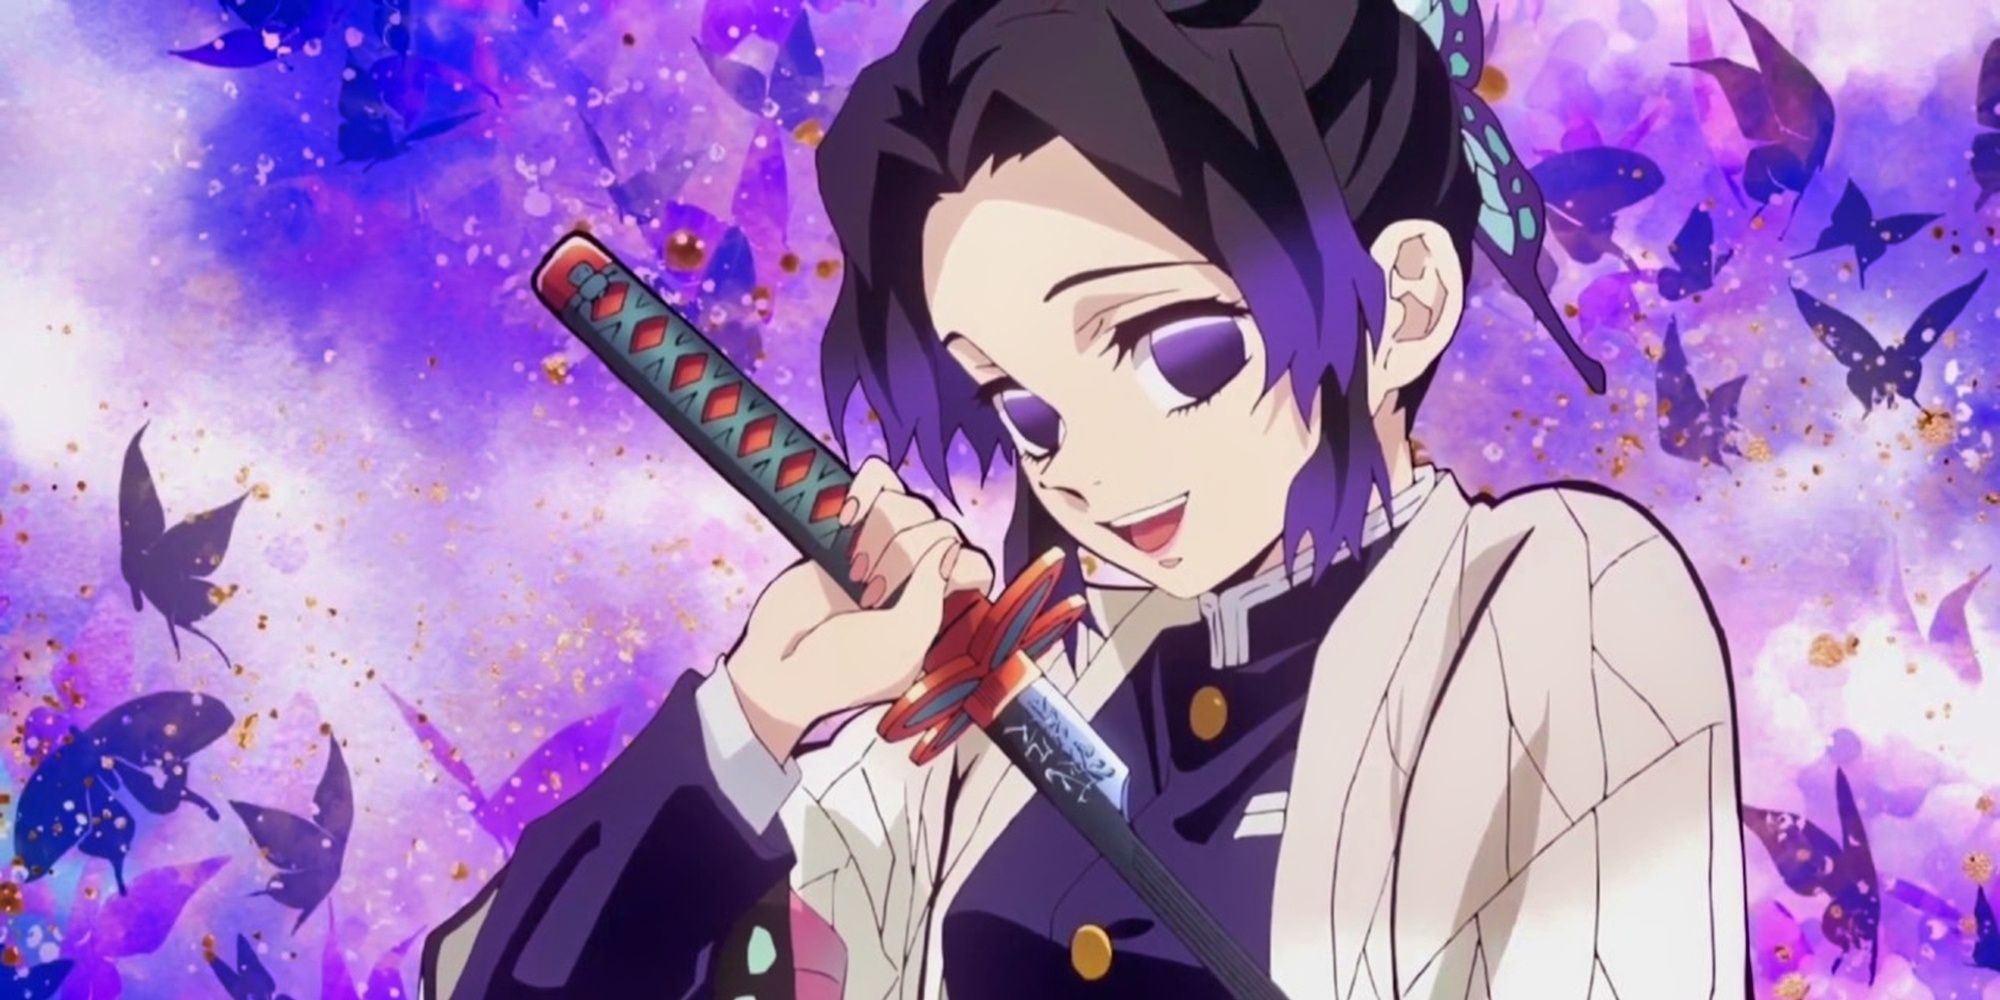 Shinobu sticking a sword to her chest in Demon Slayer